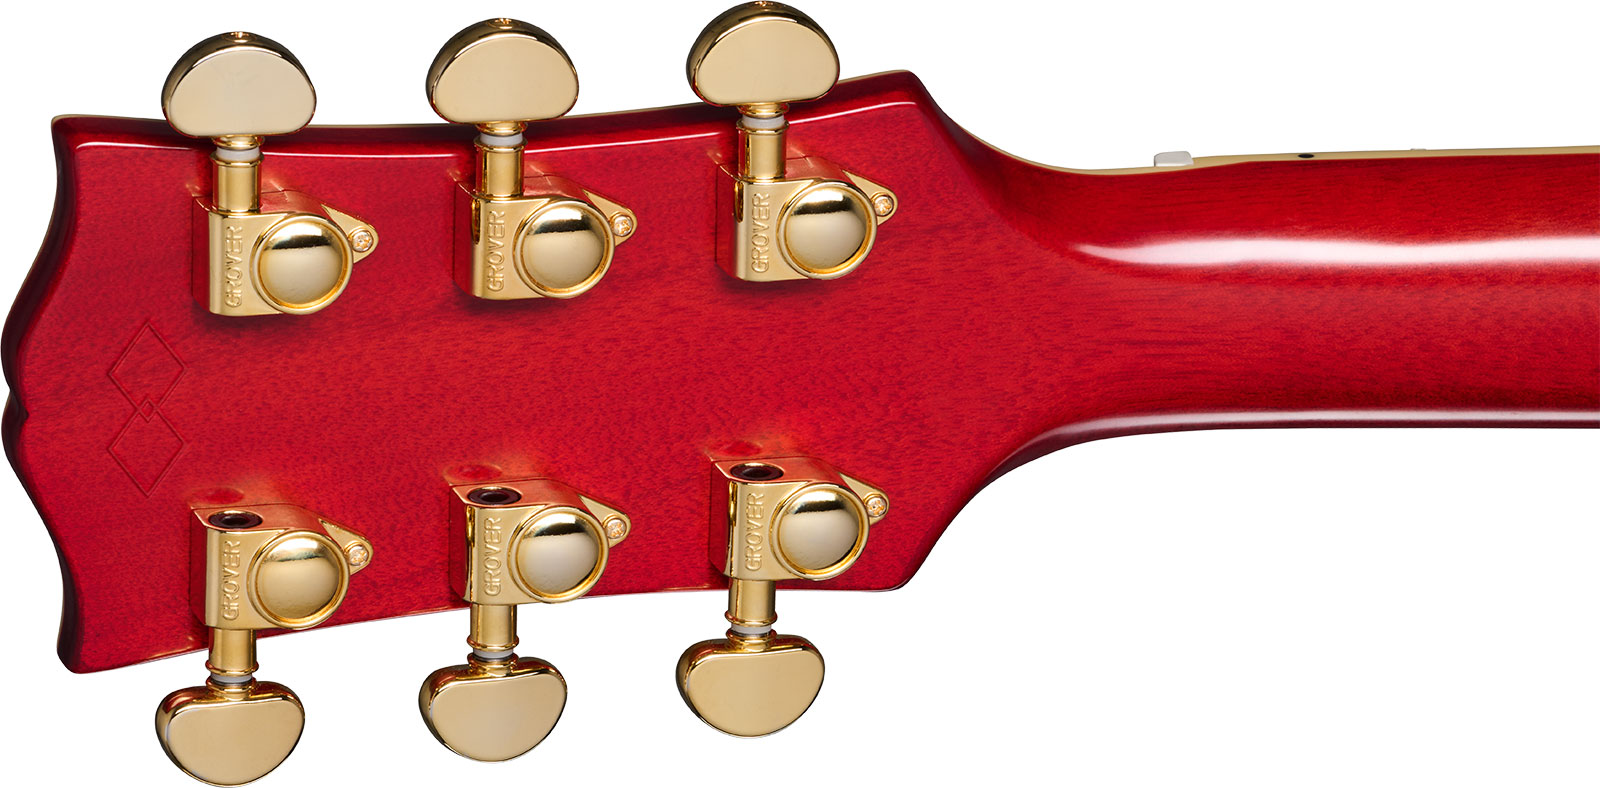 Epiphone Es355 1959 Inspired By 2h Gibson Ht Eb - Vos Cherry Red - Semi hollow elektriche gitaar - Variation 4